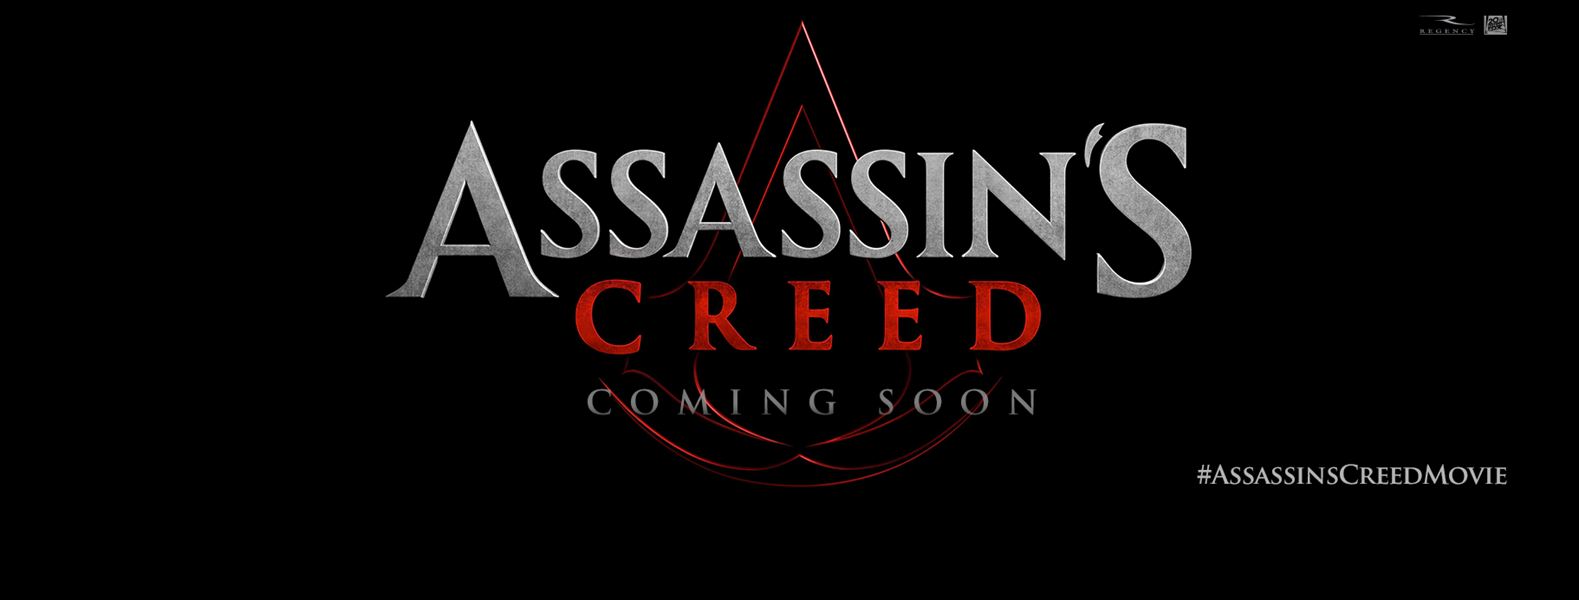 La bannière d'Assassin's Creed